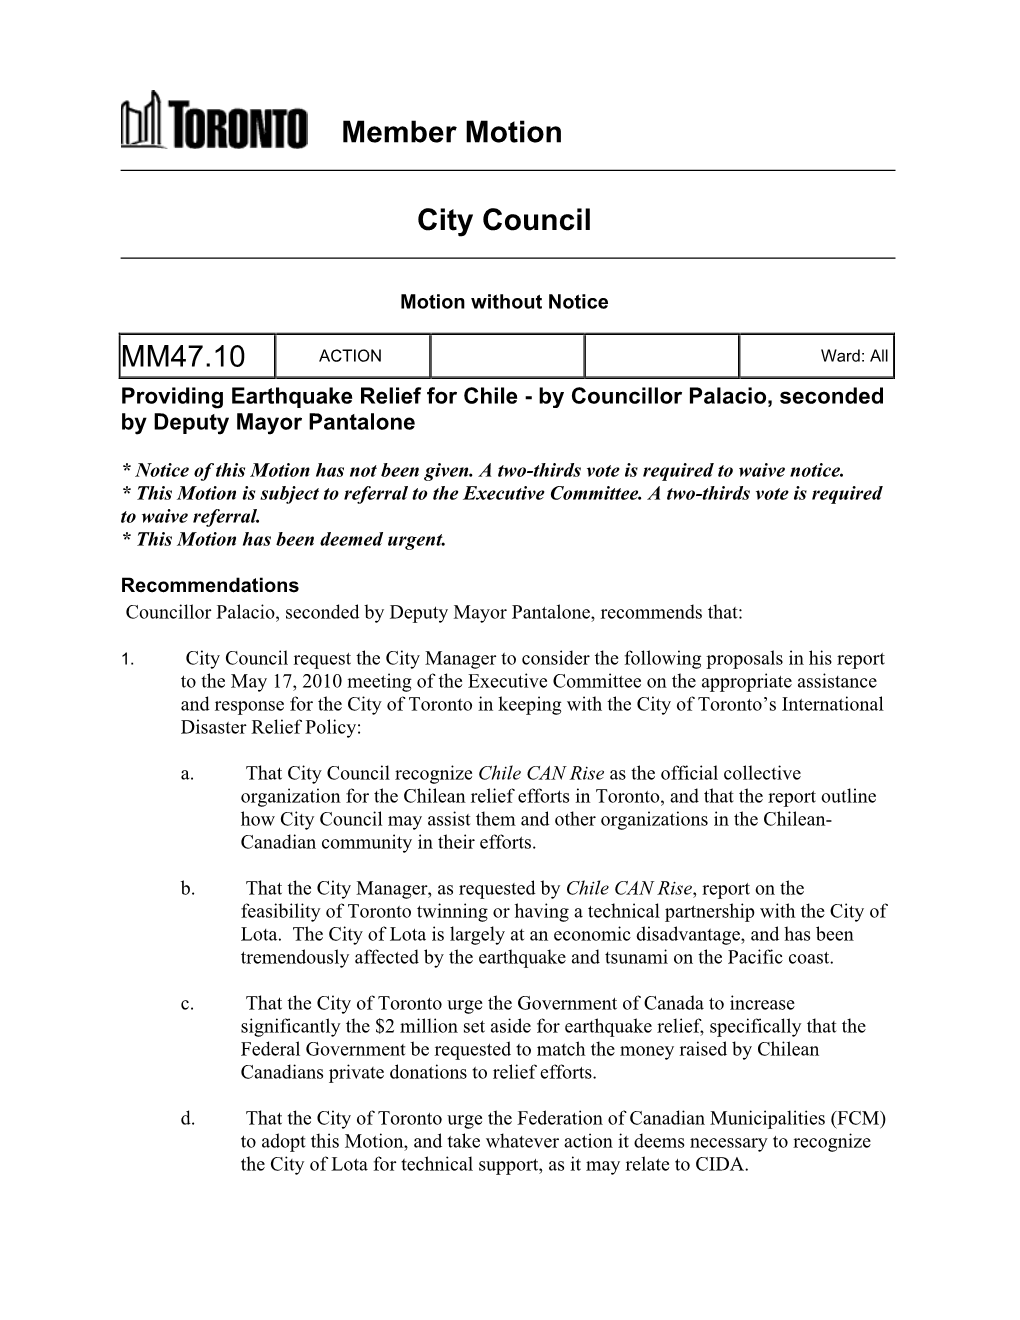 Member Motion City Council MM47.10